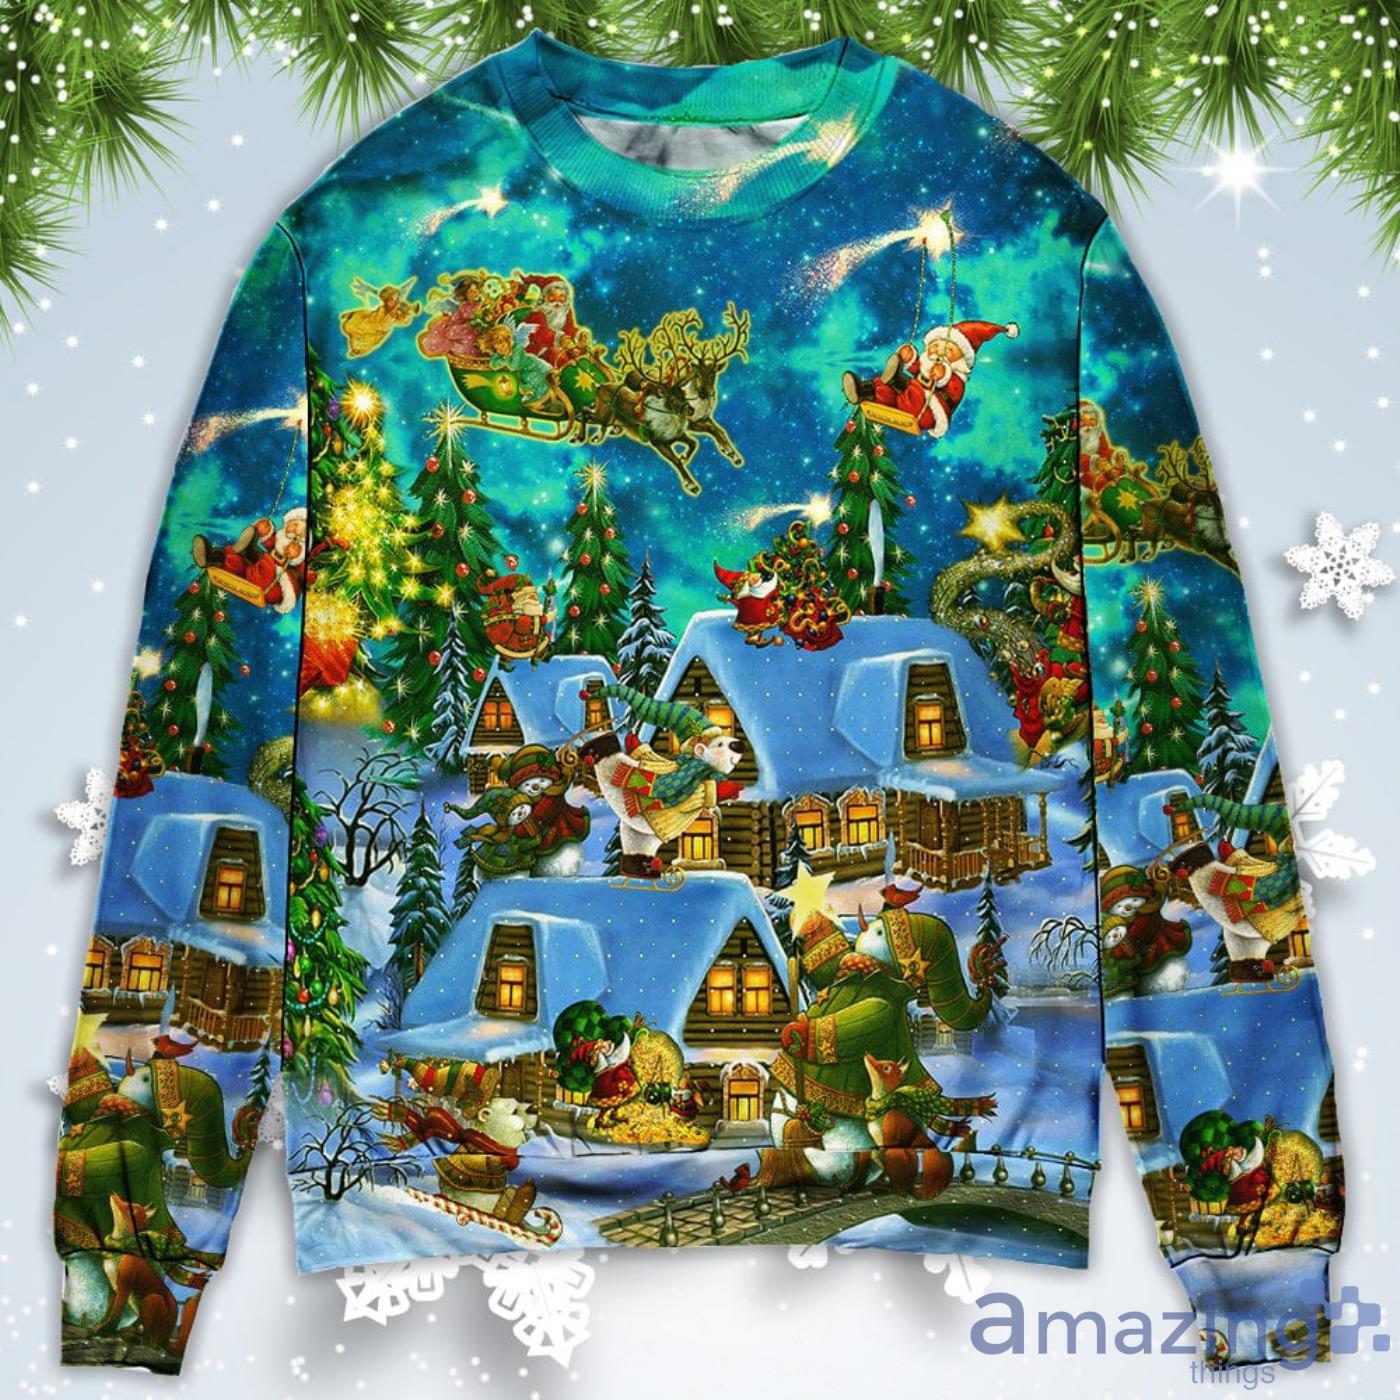 The Magical Night Christmas Sweatshirt Sweater Product Photo 1